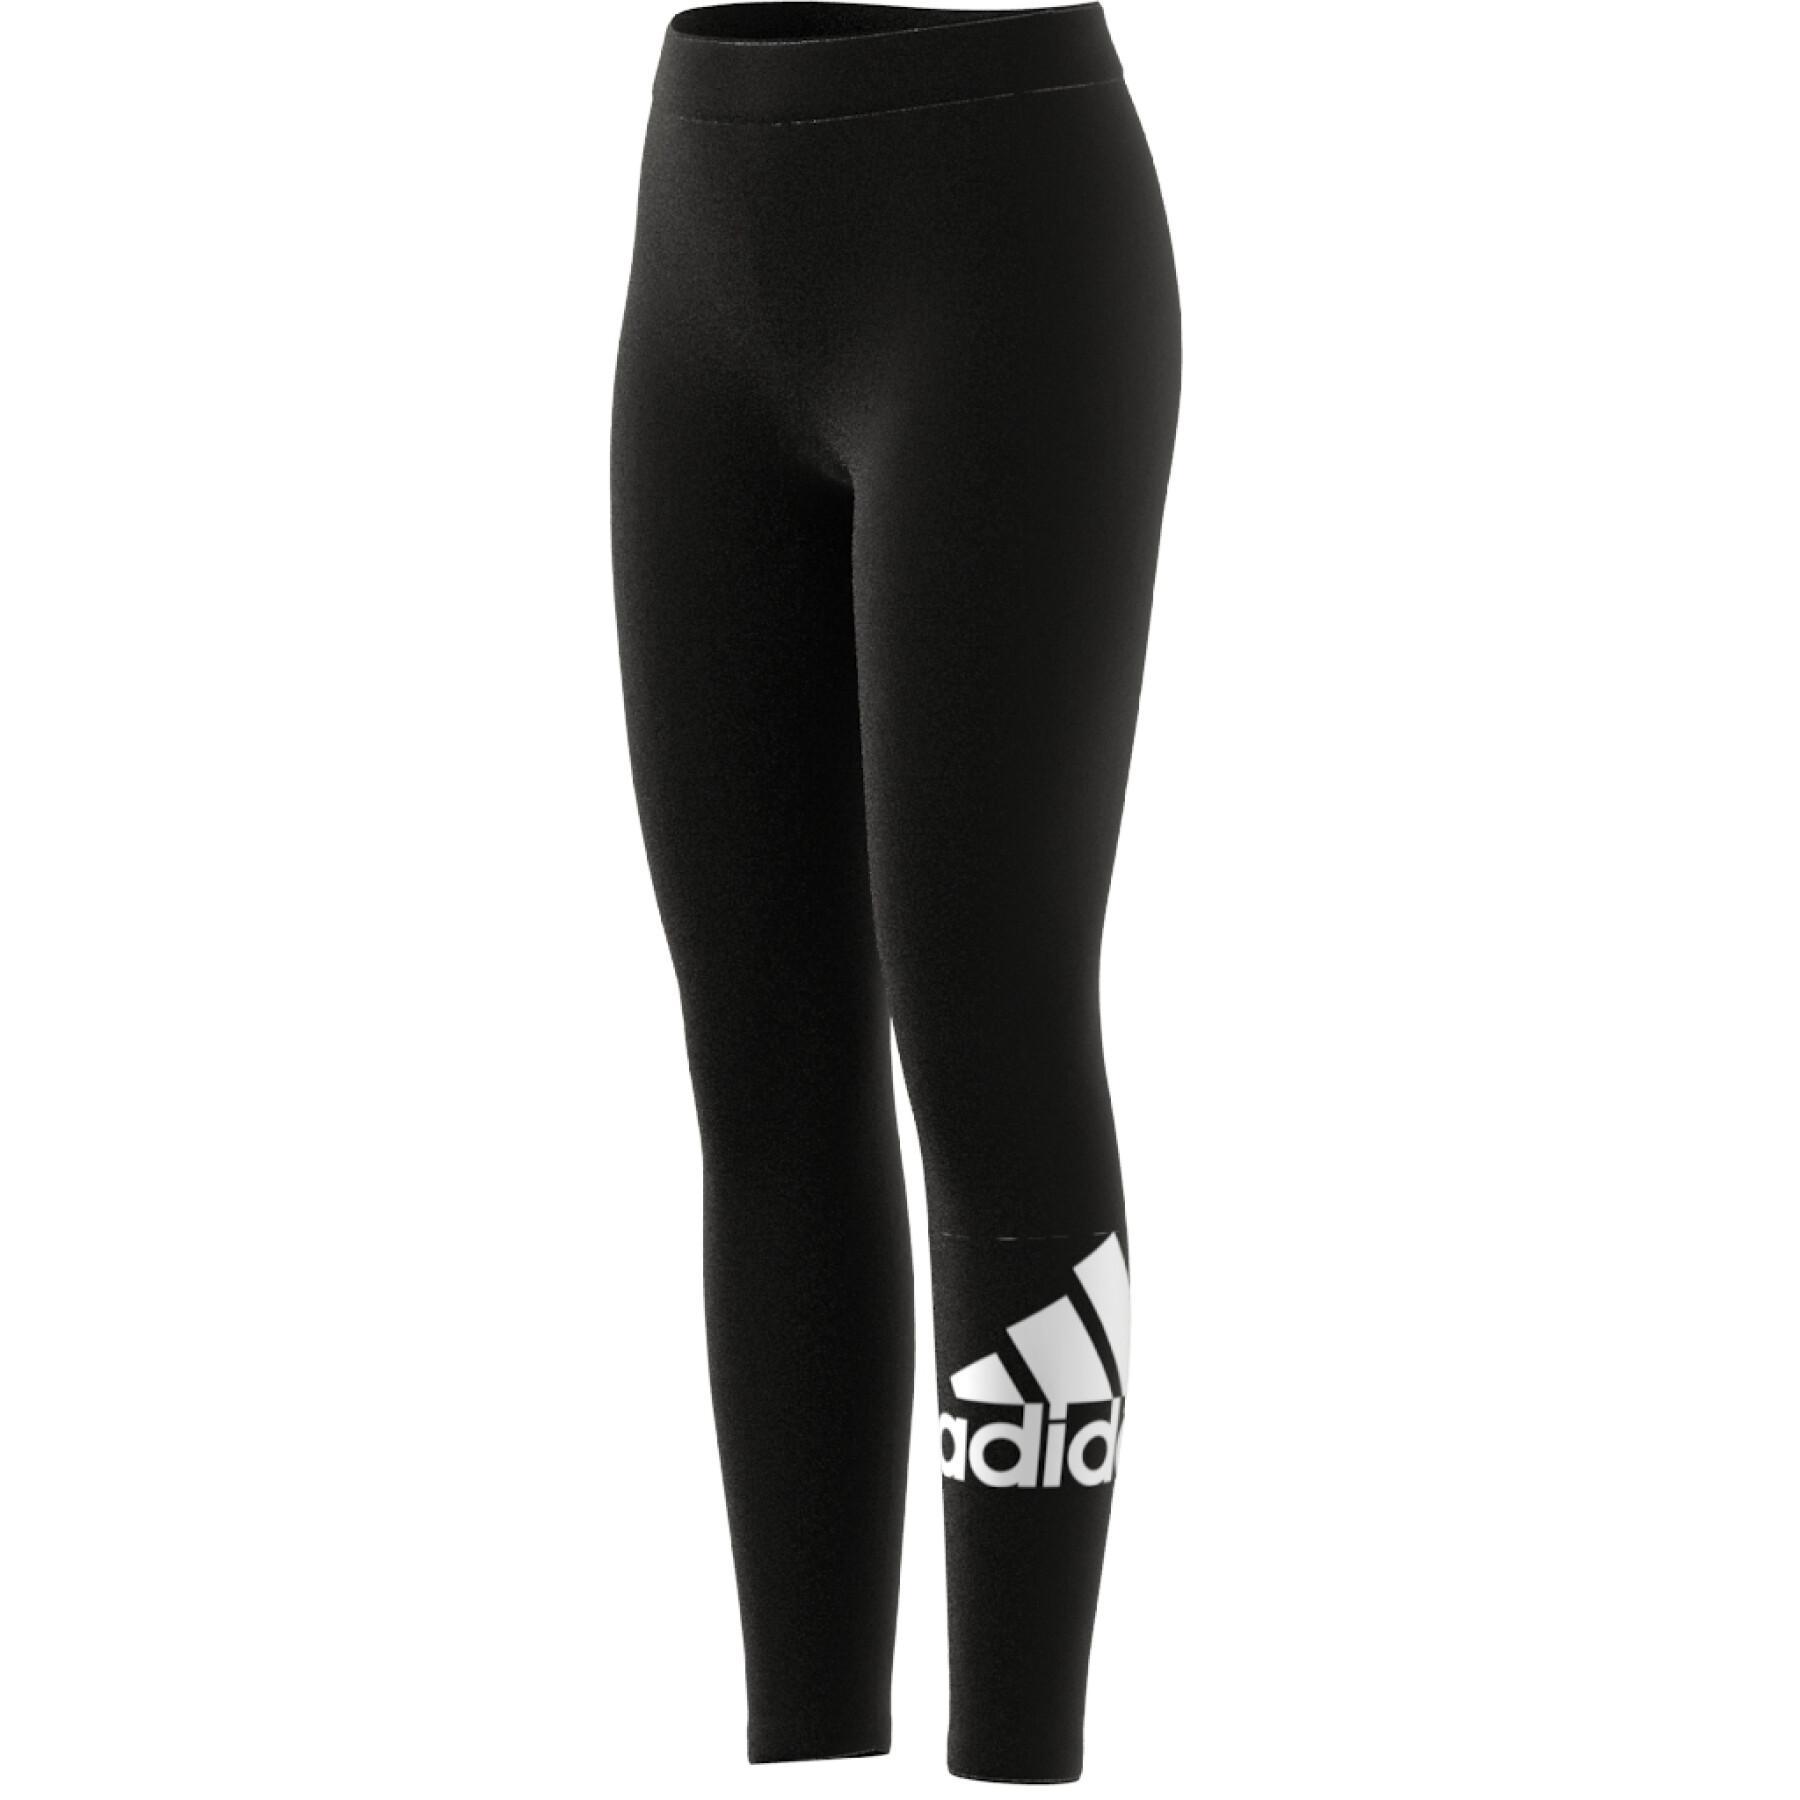 - Legging - Big girl Textile Handball Logo Baselayers adidas cotton wear - Essentials